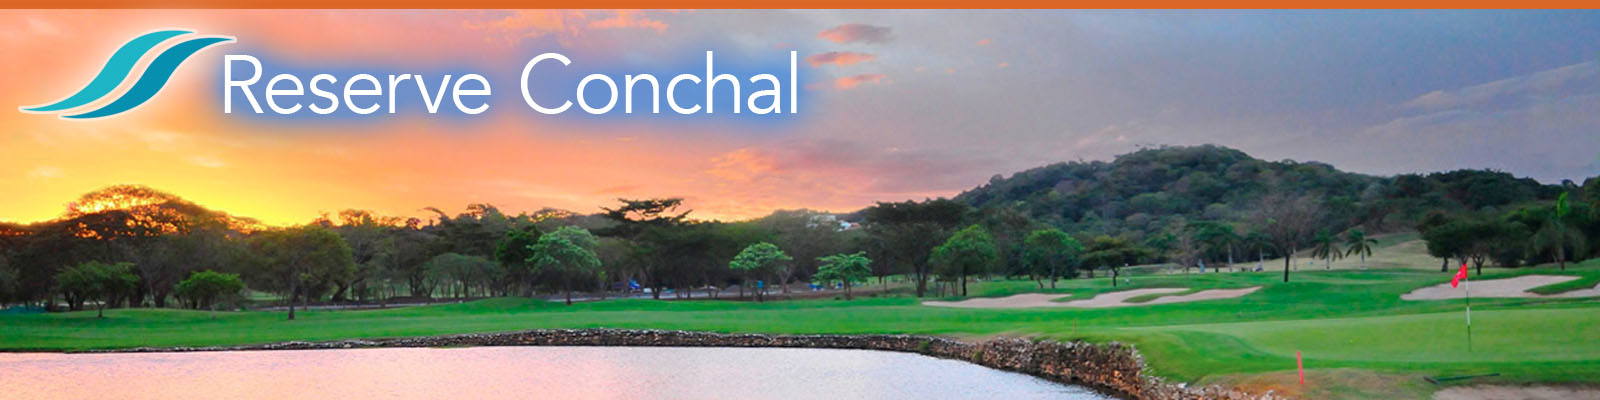 reserva-conchal-real-estate